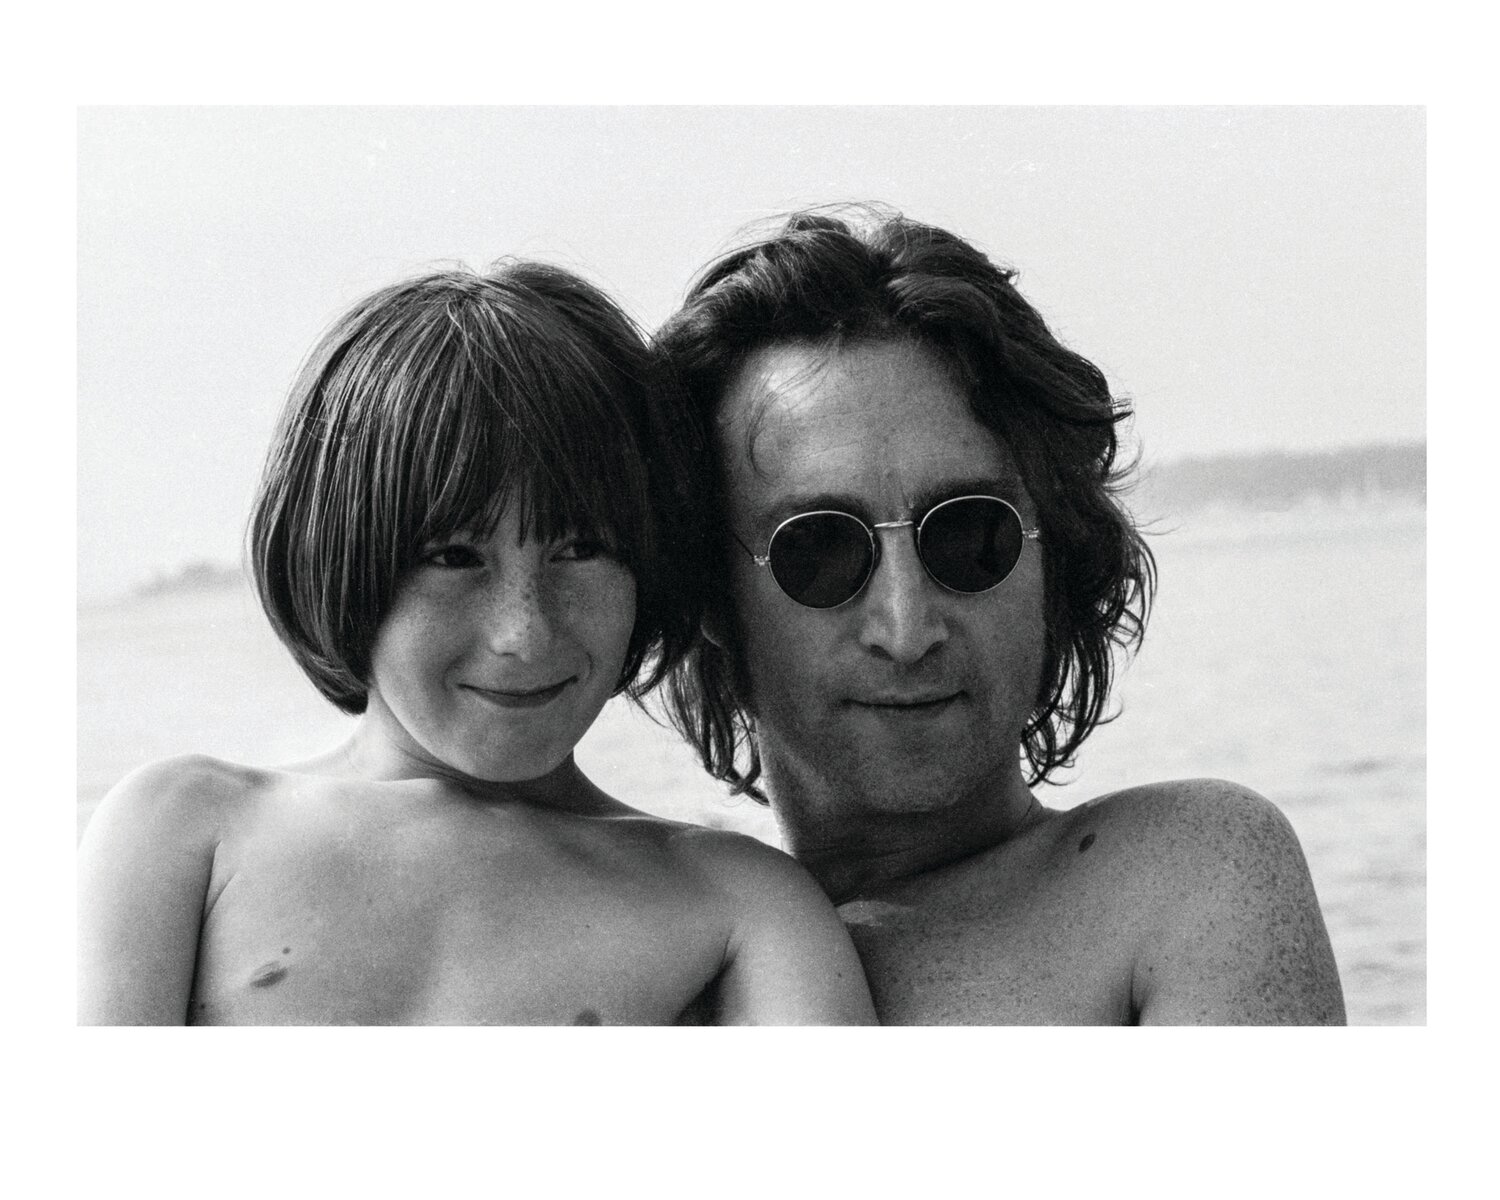 John Lennon, right, with his son, Julian.